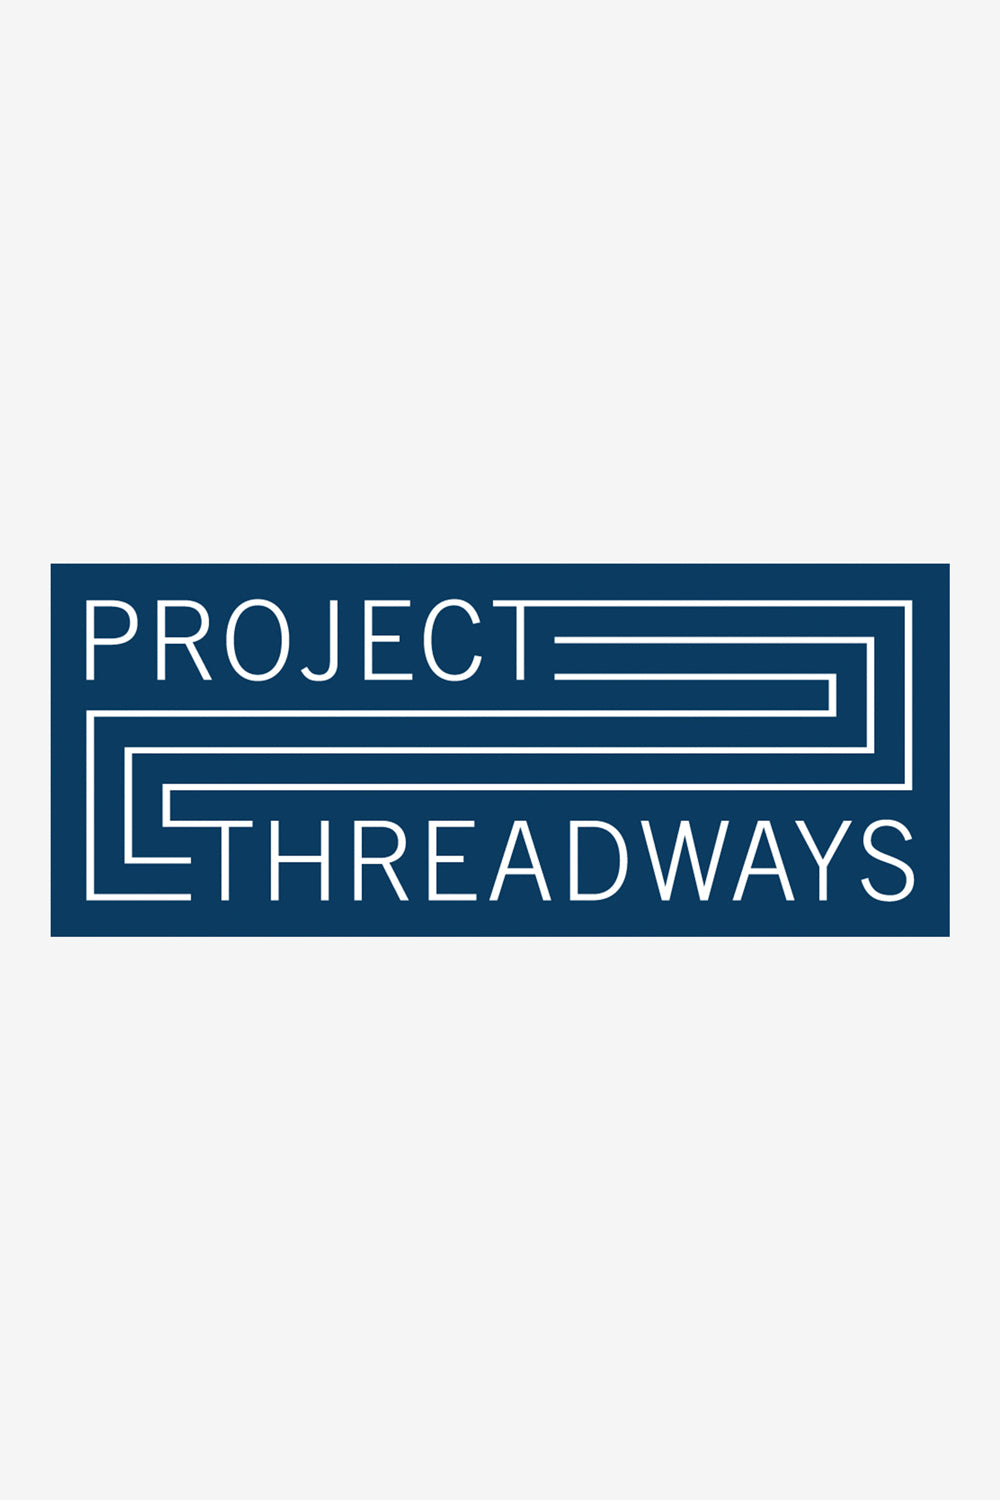 Project Threadways Logo.